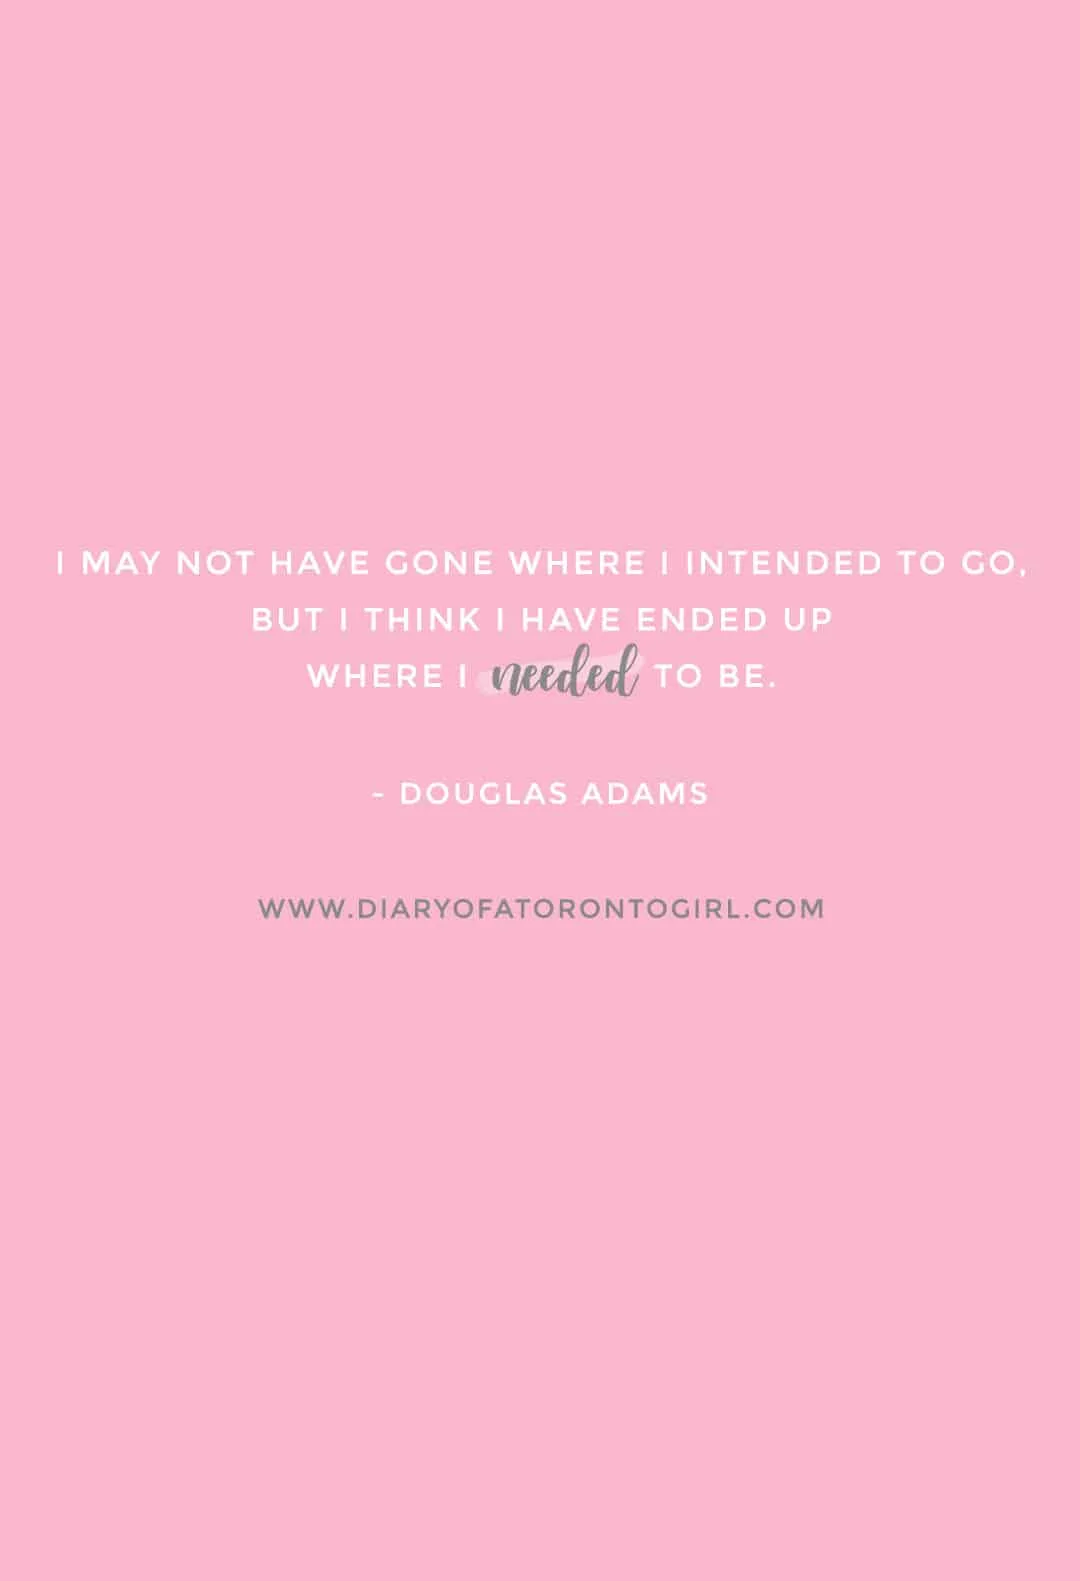 Douglas Adams inspirational quote